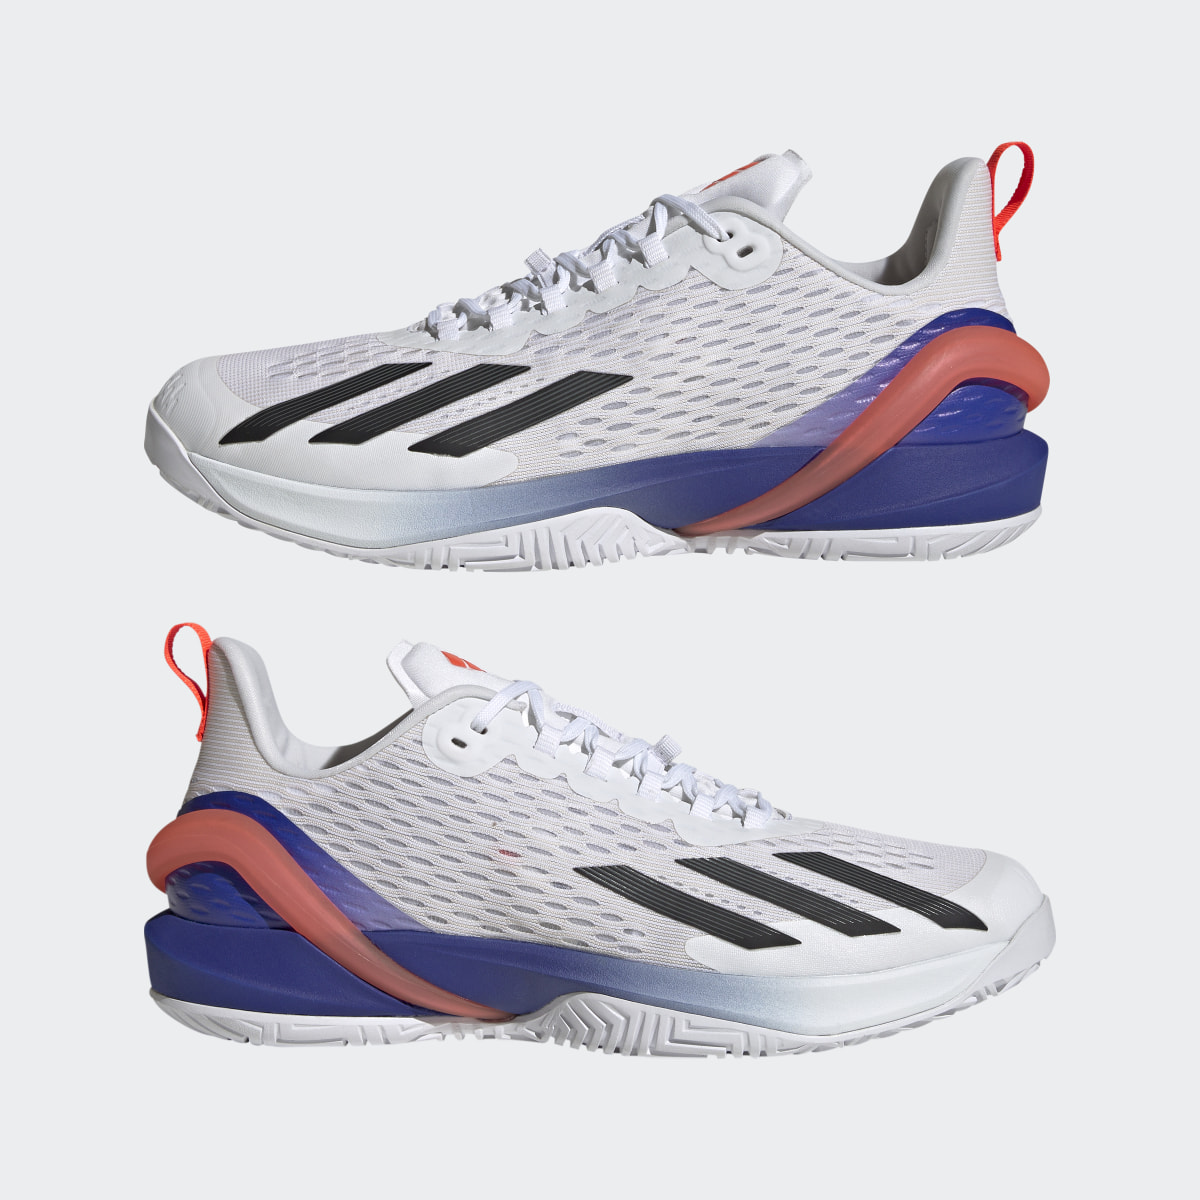 Adidas adizero Cybersonic Tenis Ayakkabısı. 15